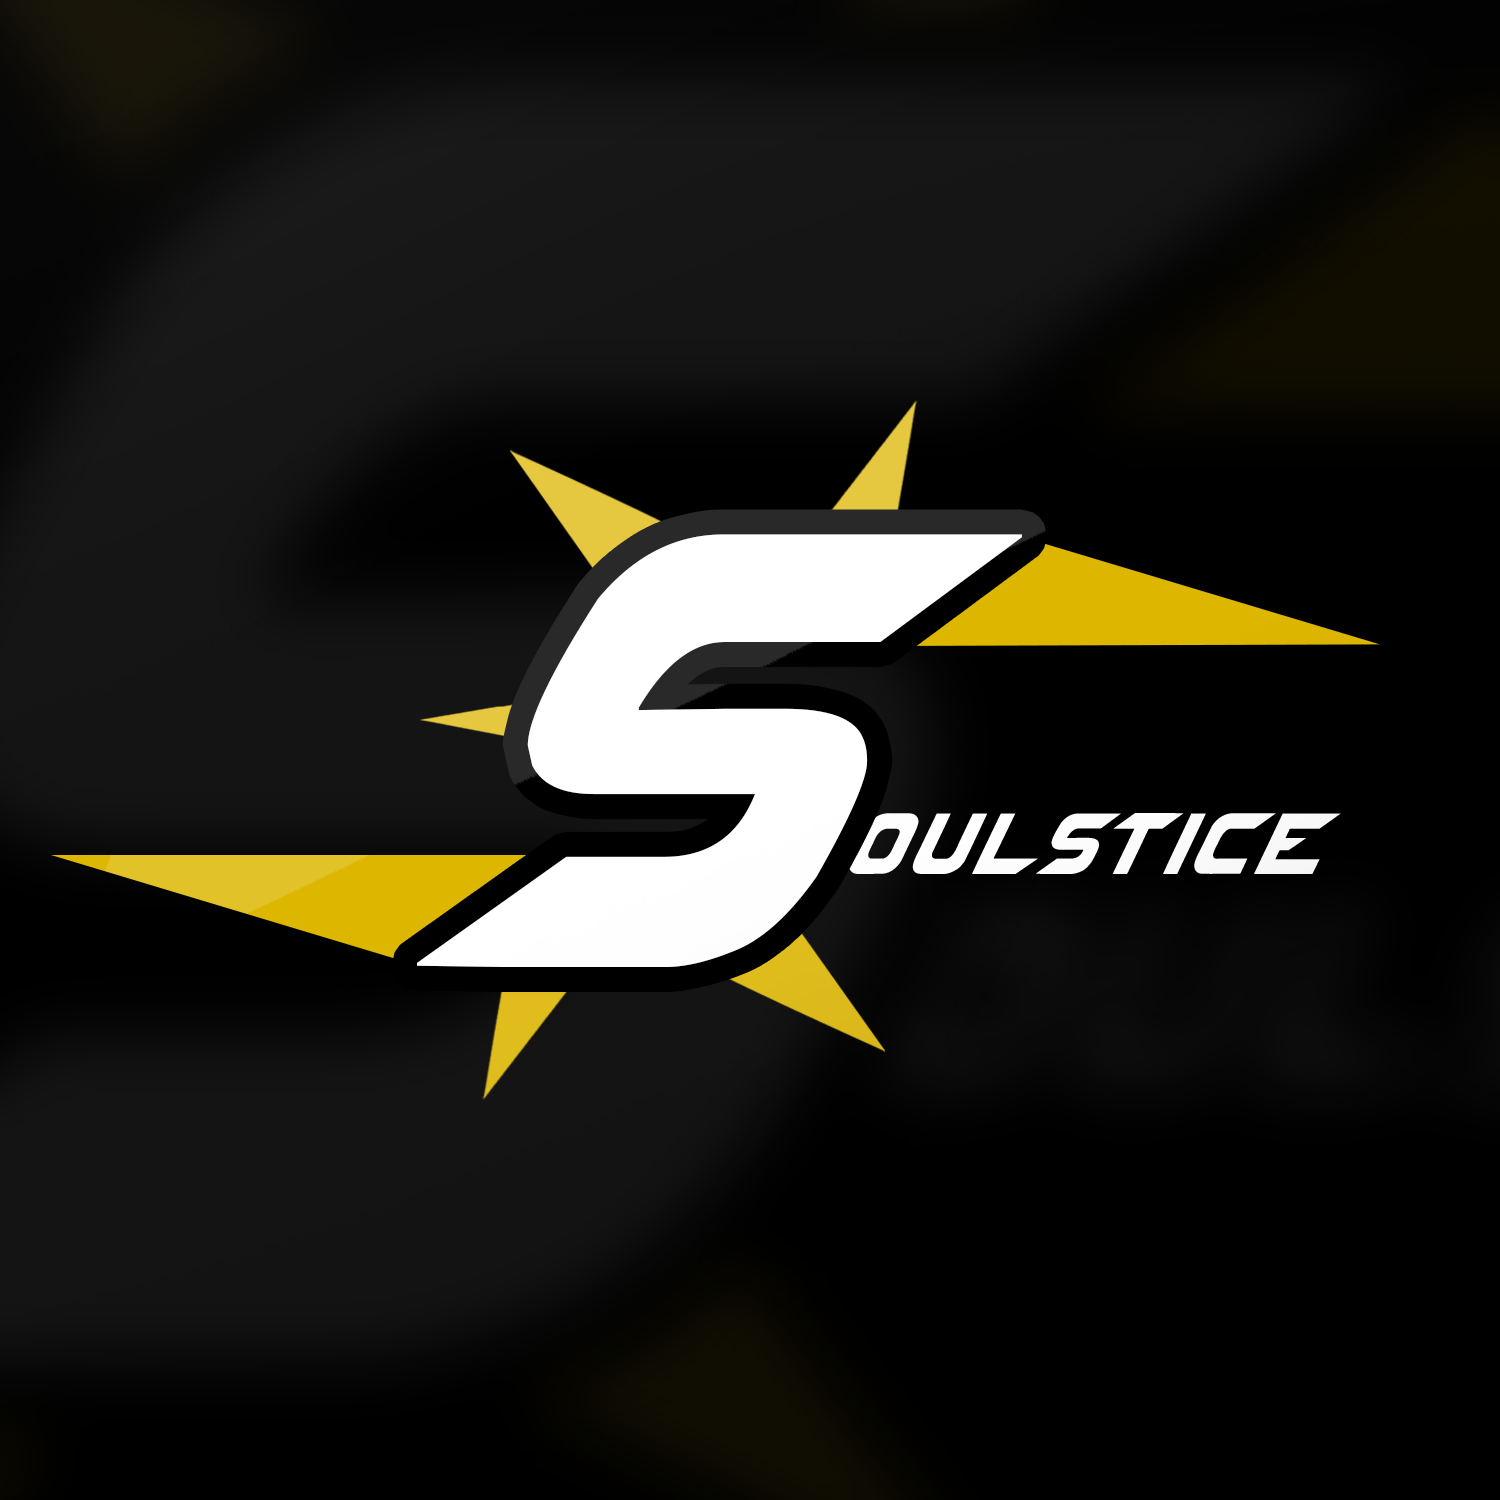 Soulstice logo